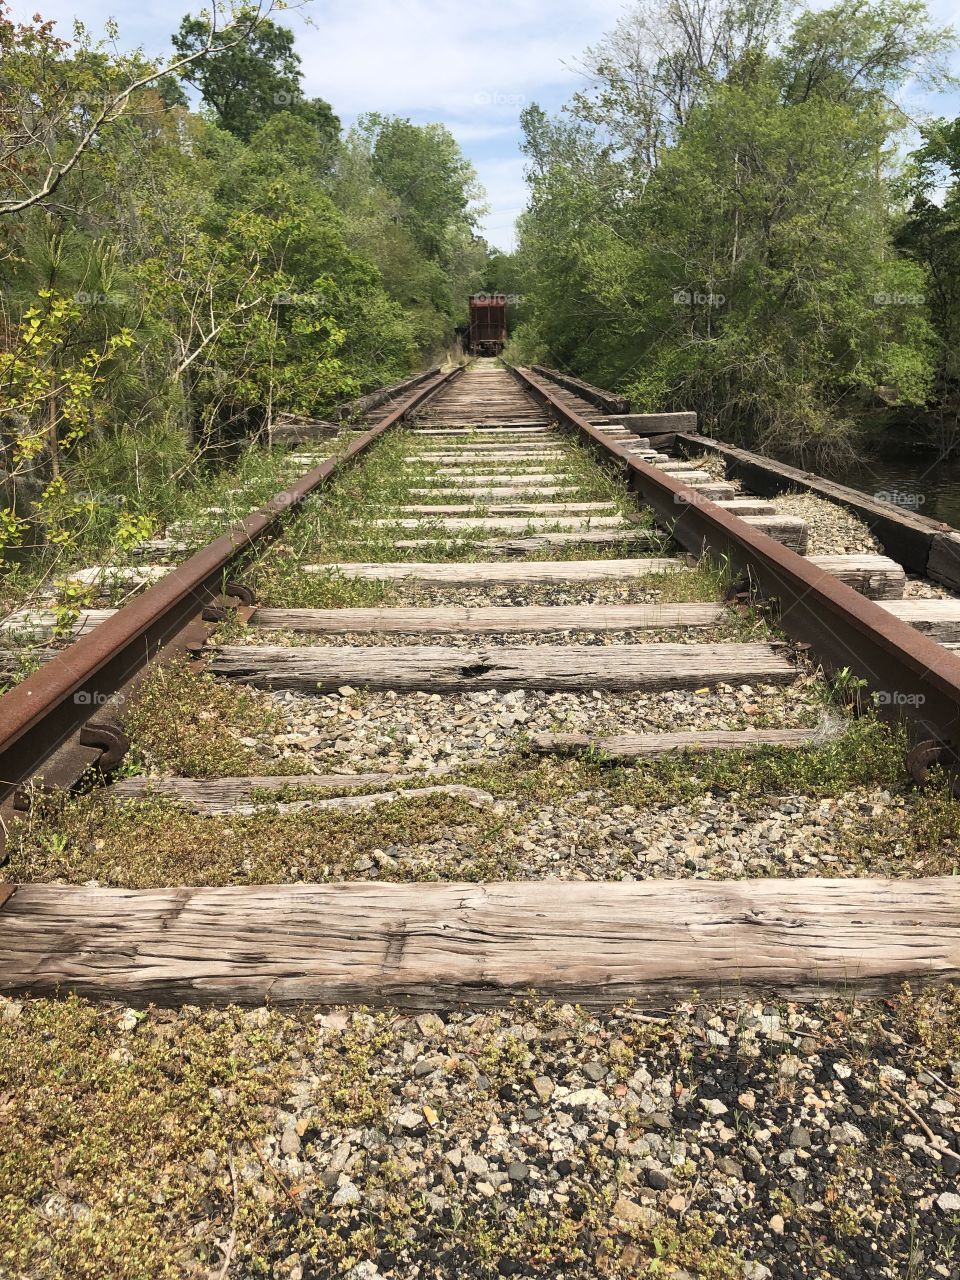 Abandoned railroad tracks. Urban vs rural.